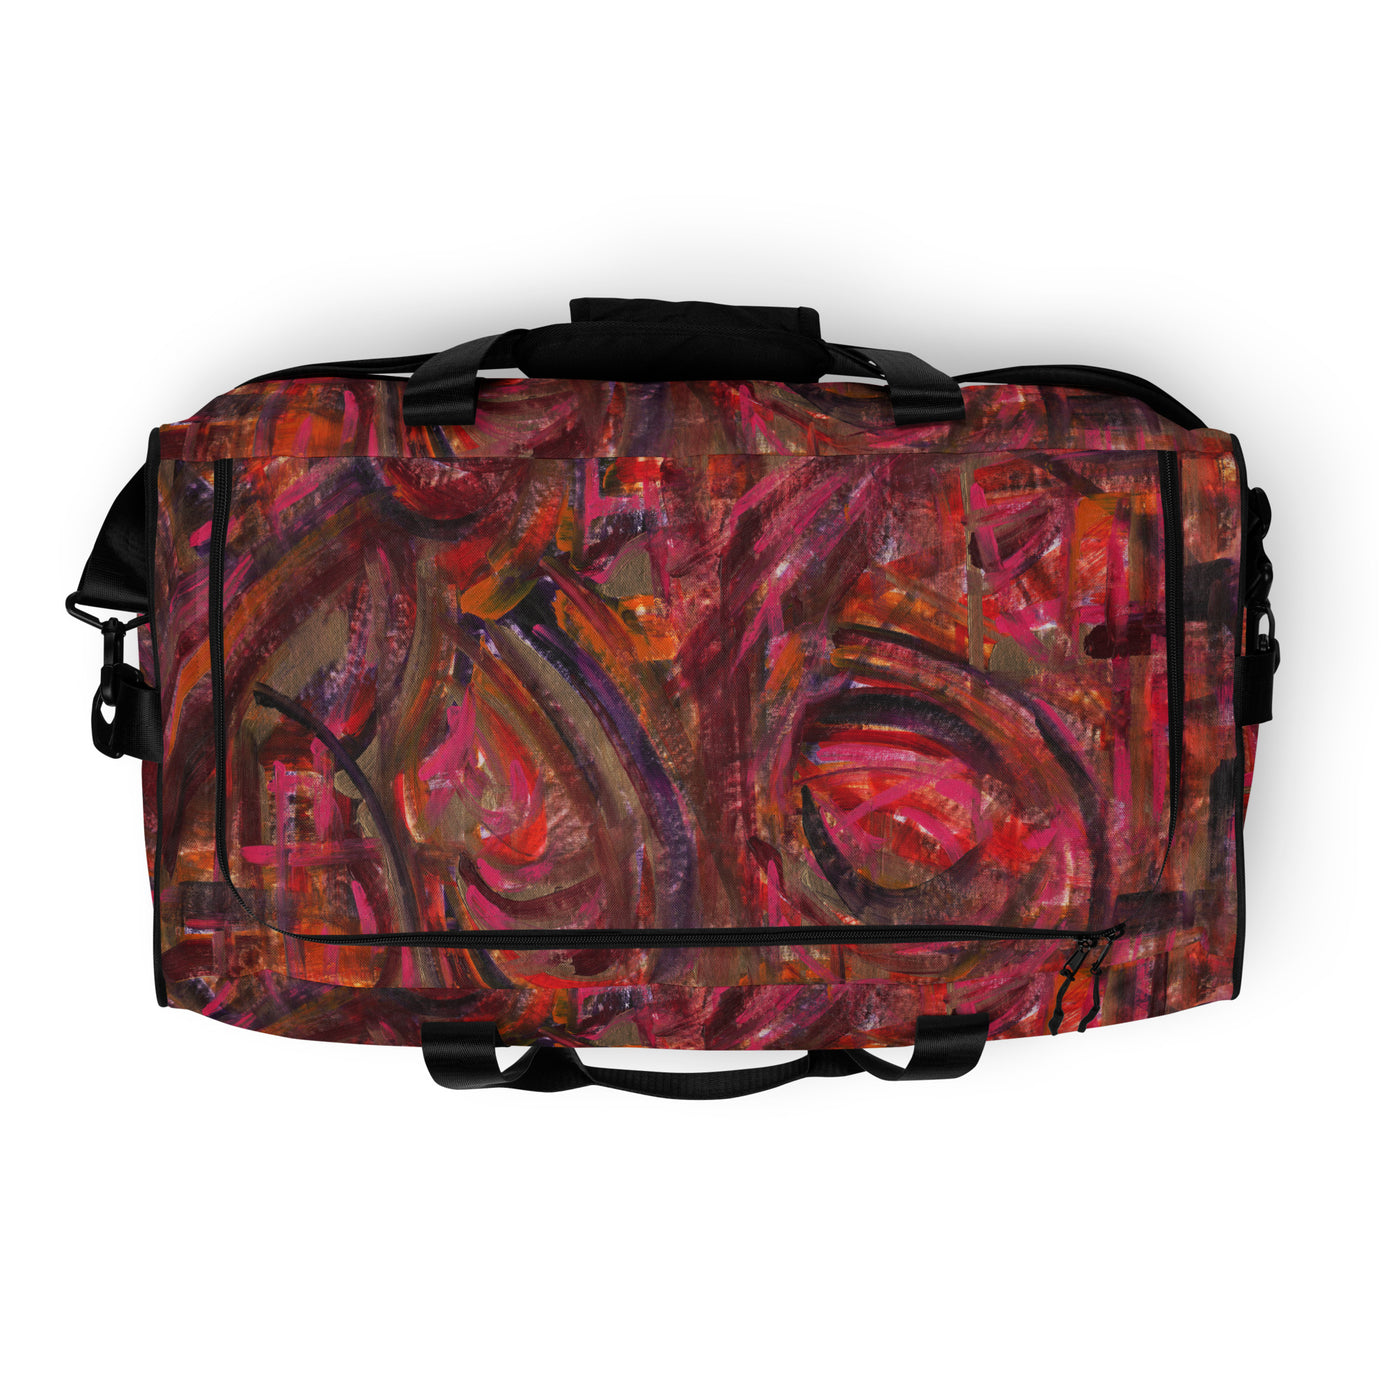 Sunrise Art Duffle bag